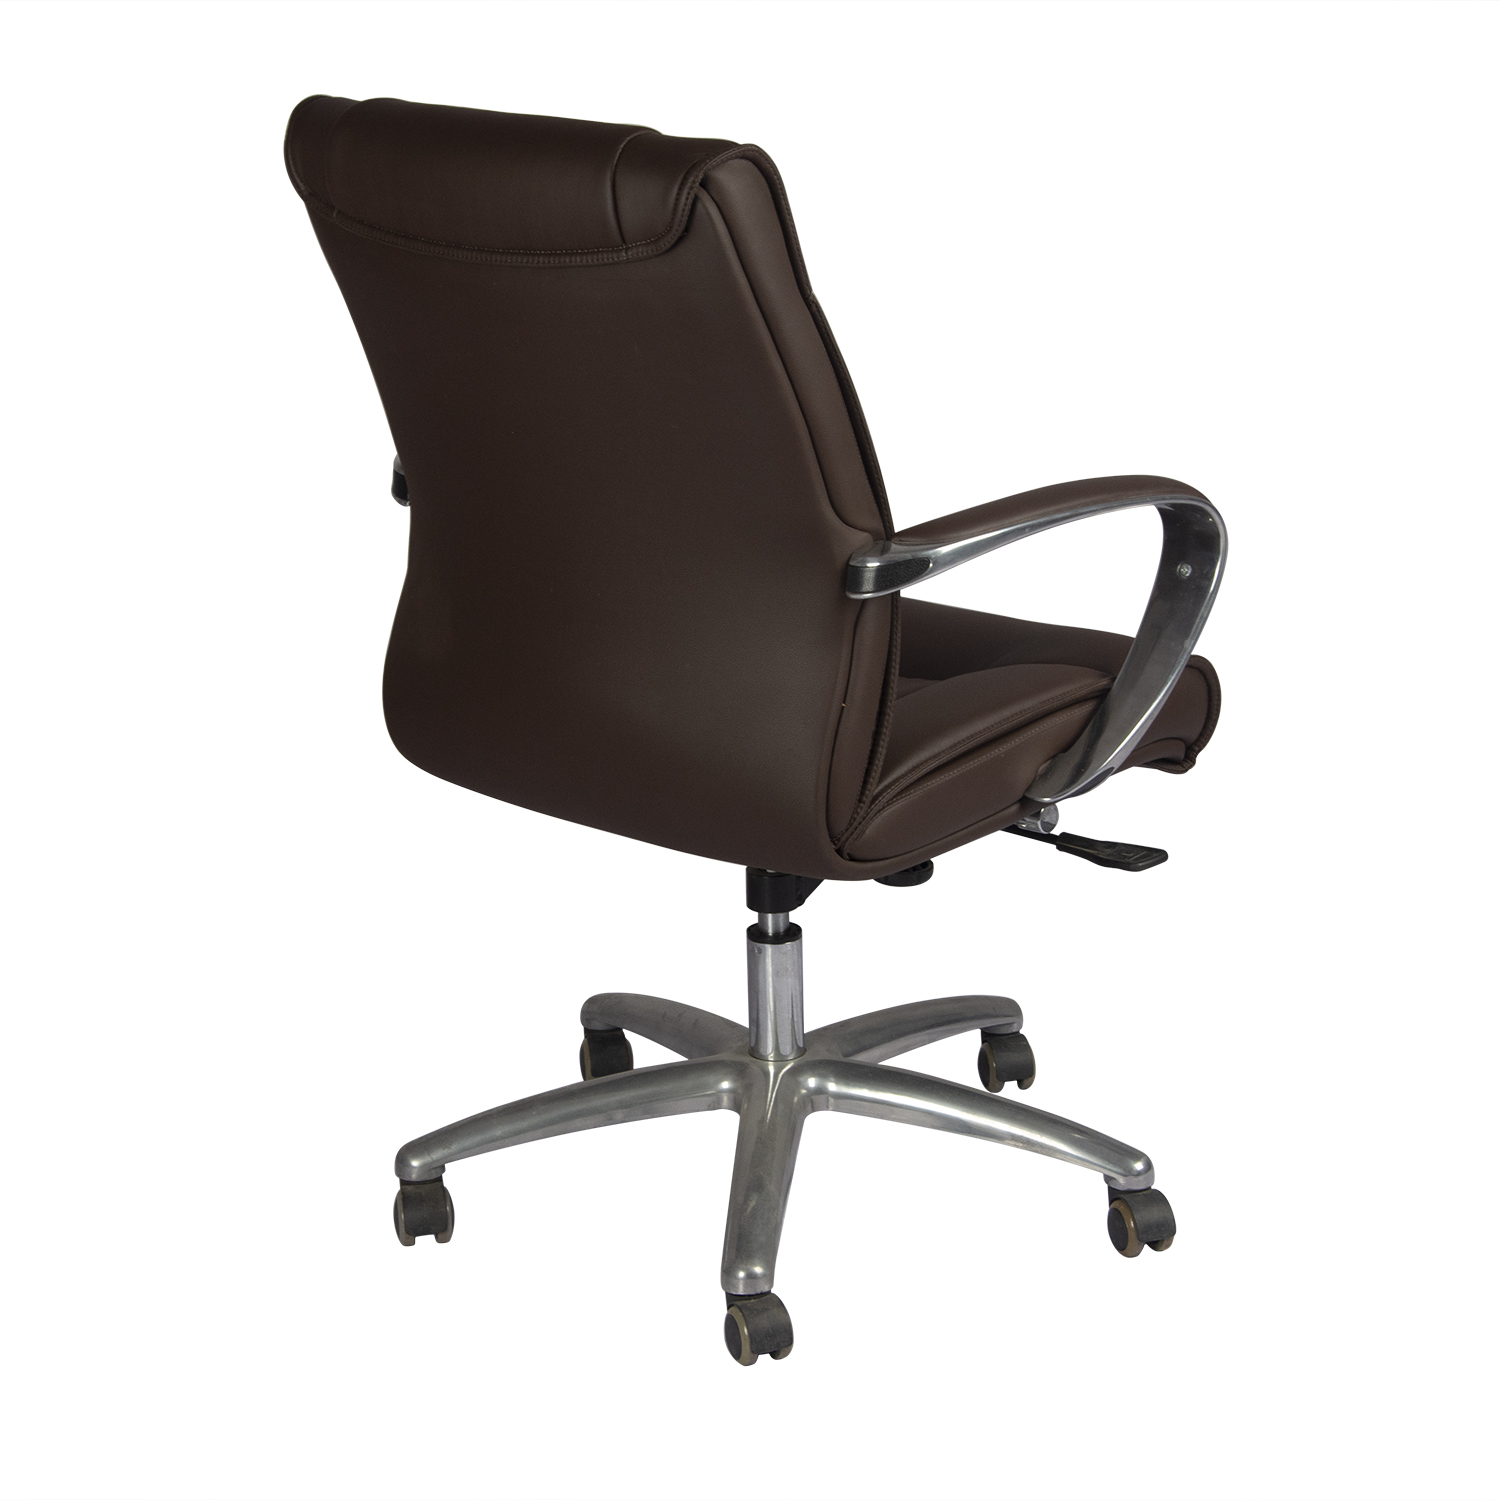 PROFURN EBY 9280 Medium back chair||Brown